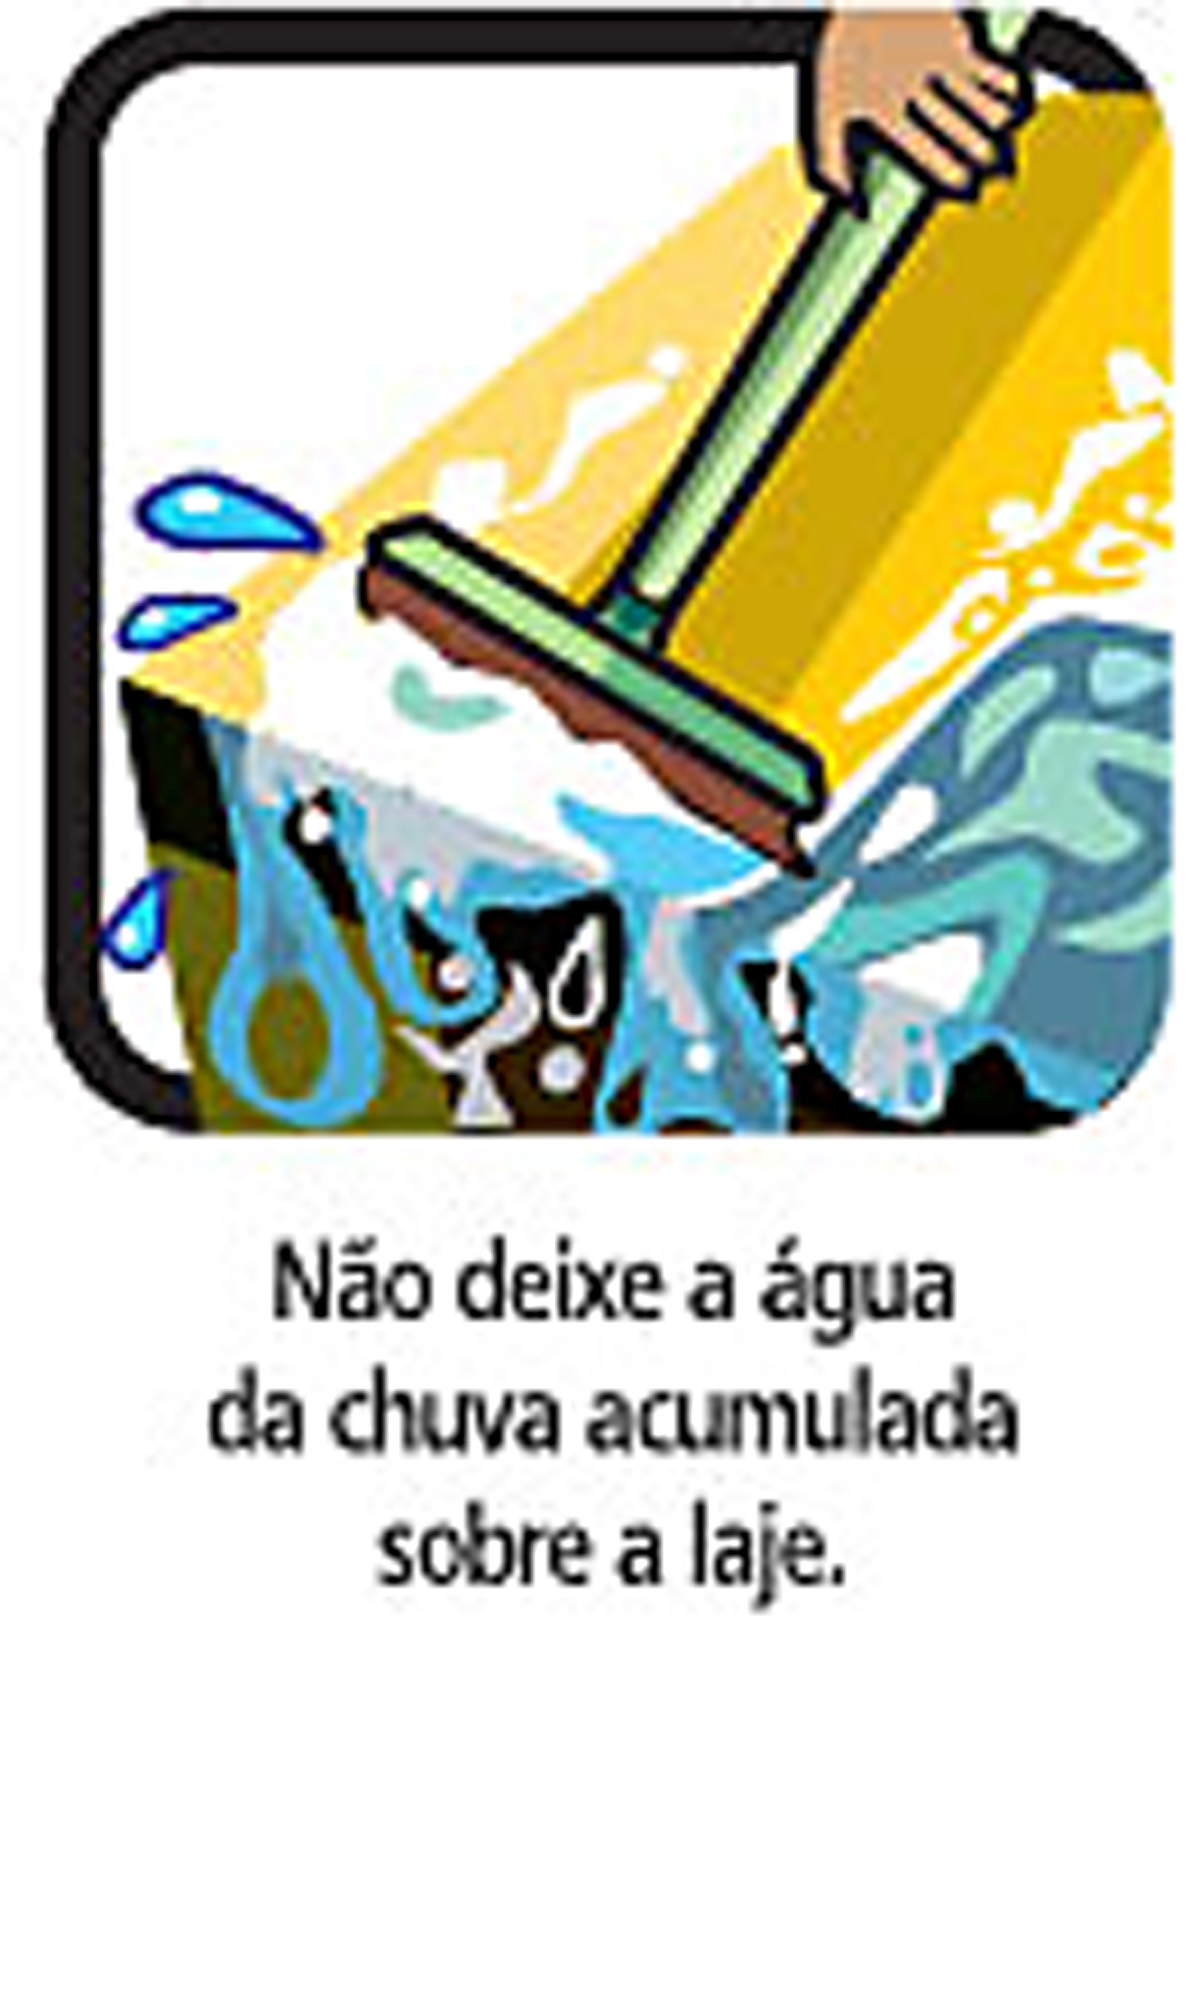  <a style='float:right;color:#ccc' href='https://www3.al.sp.gov.br/repositorio/noticia/03-2010/figuras combate à dengue.jpg' target=_blank><i class='bi bi-zoom-in'></i> Clique para ver a imagem </a>